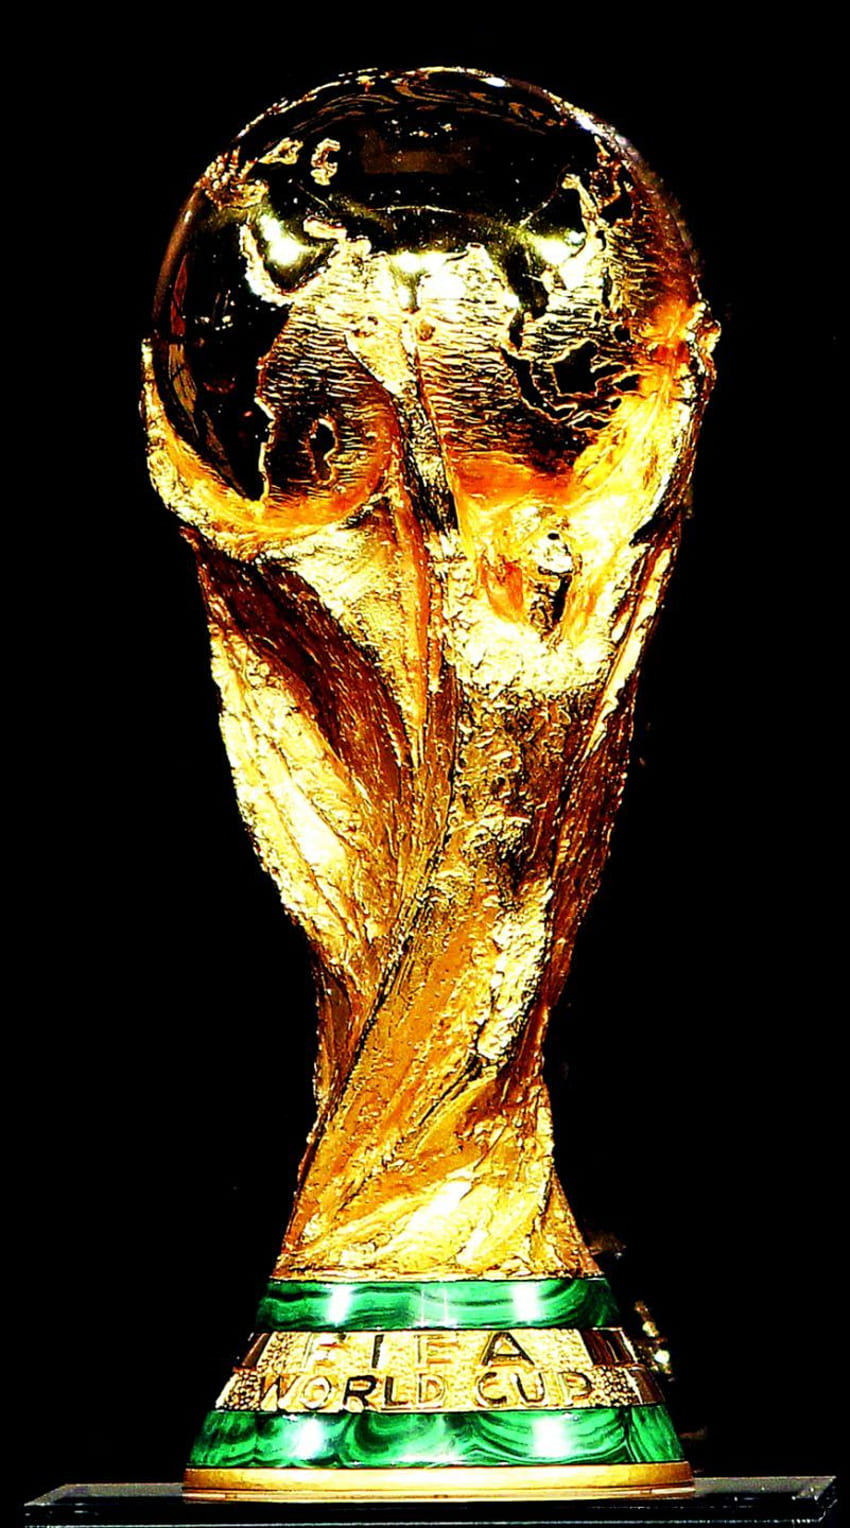 54+] World Cup Qatar 2022 Wallpapers - WallpaperSafari